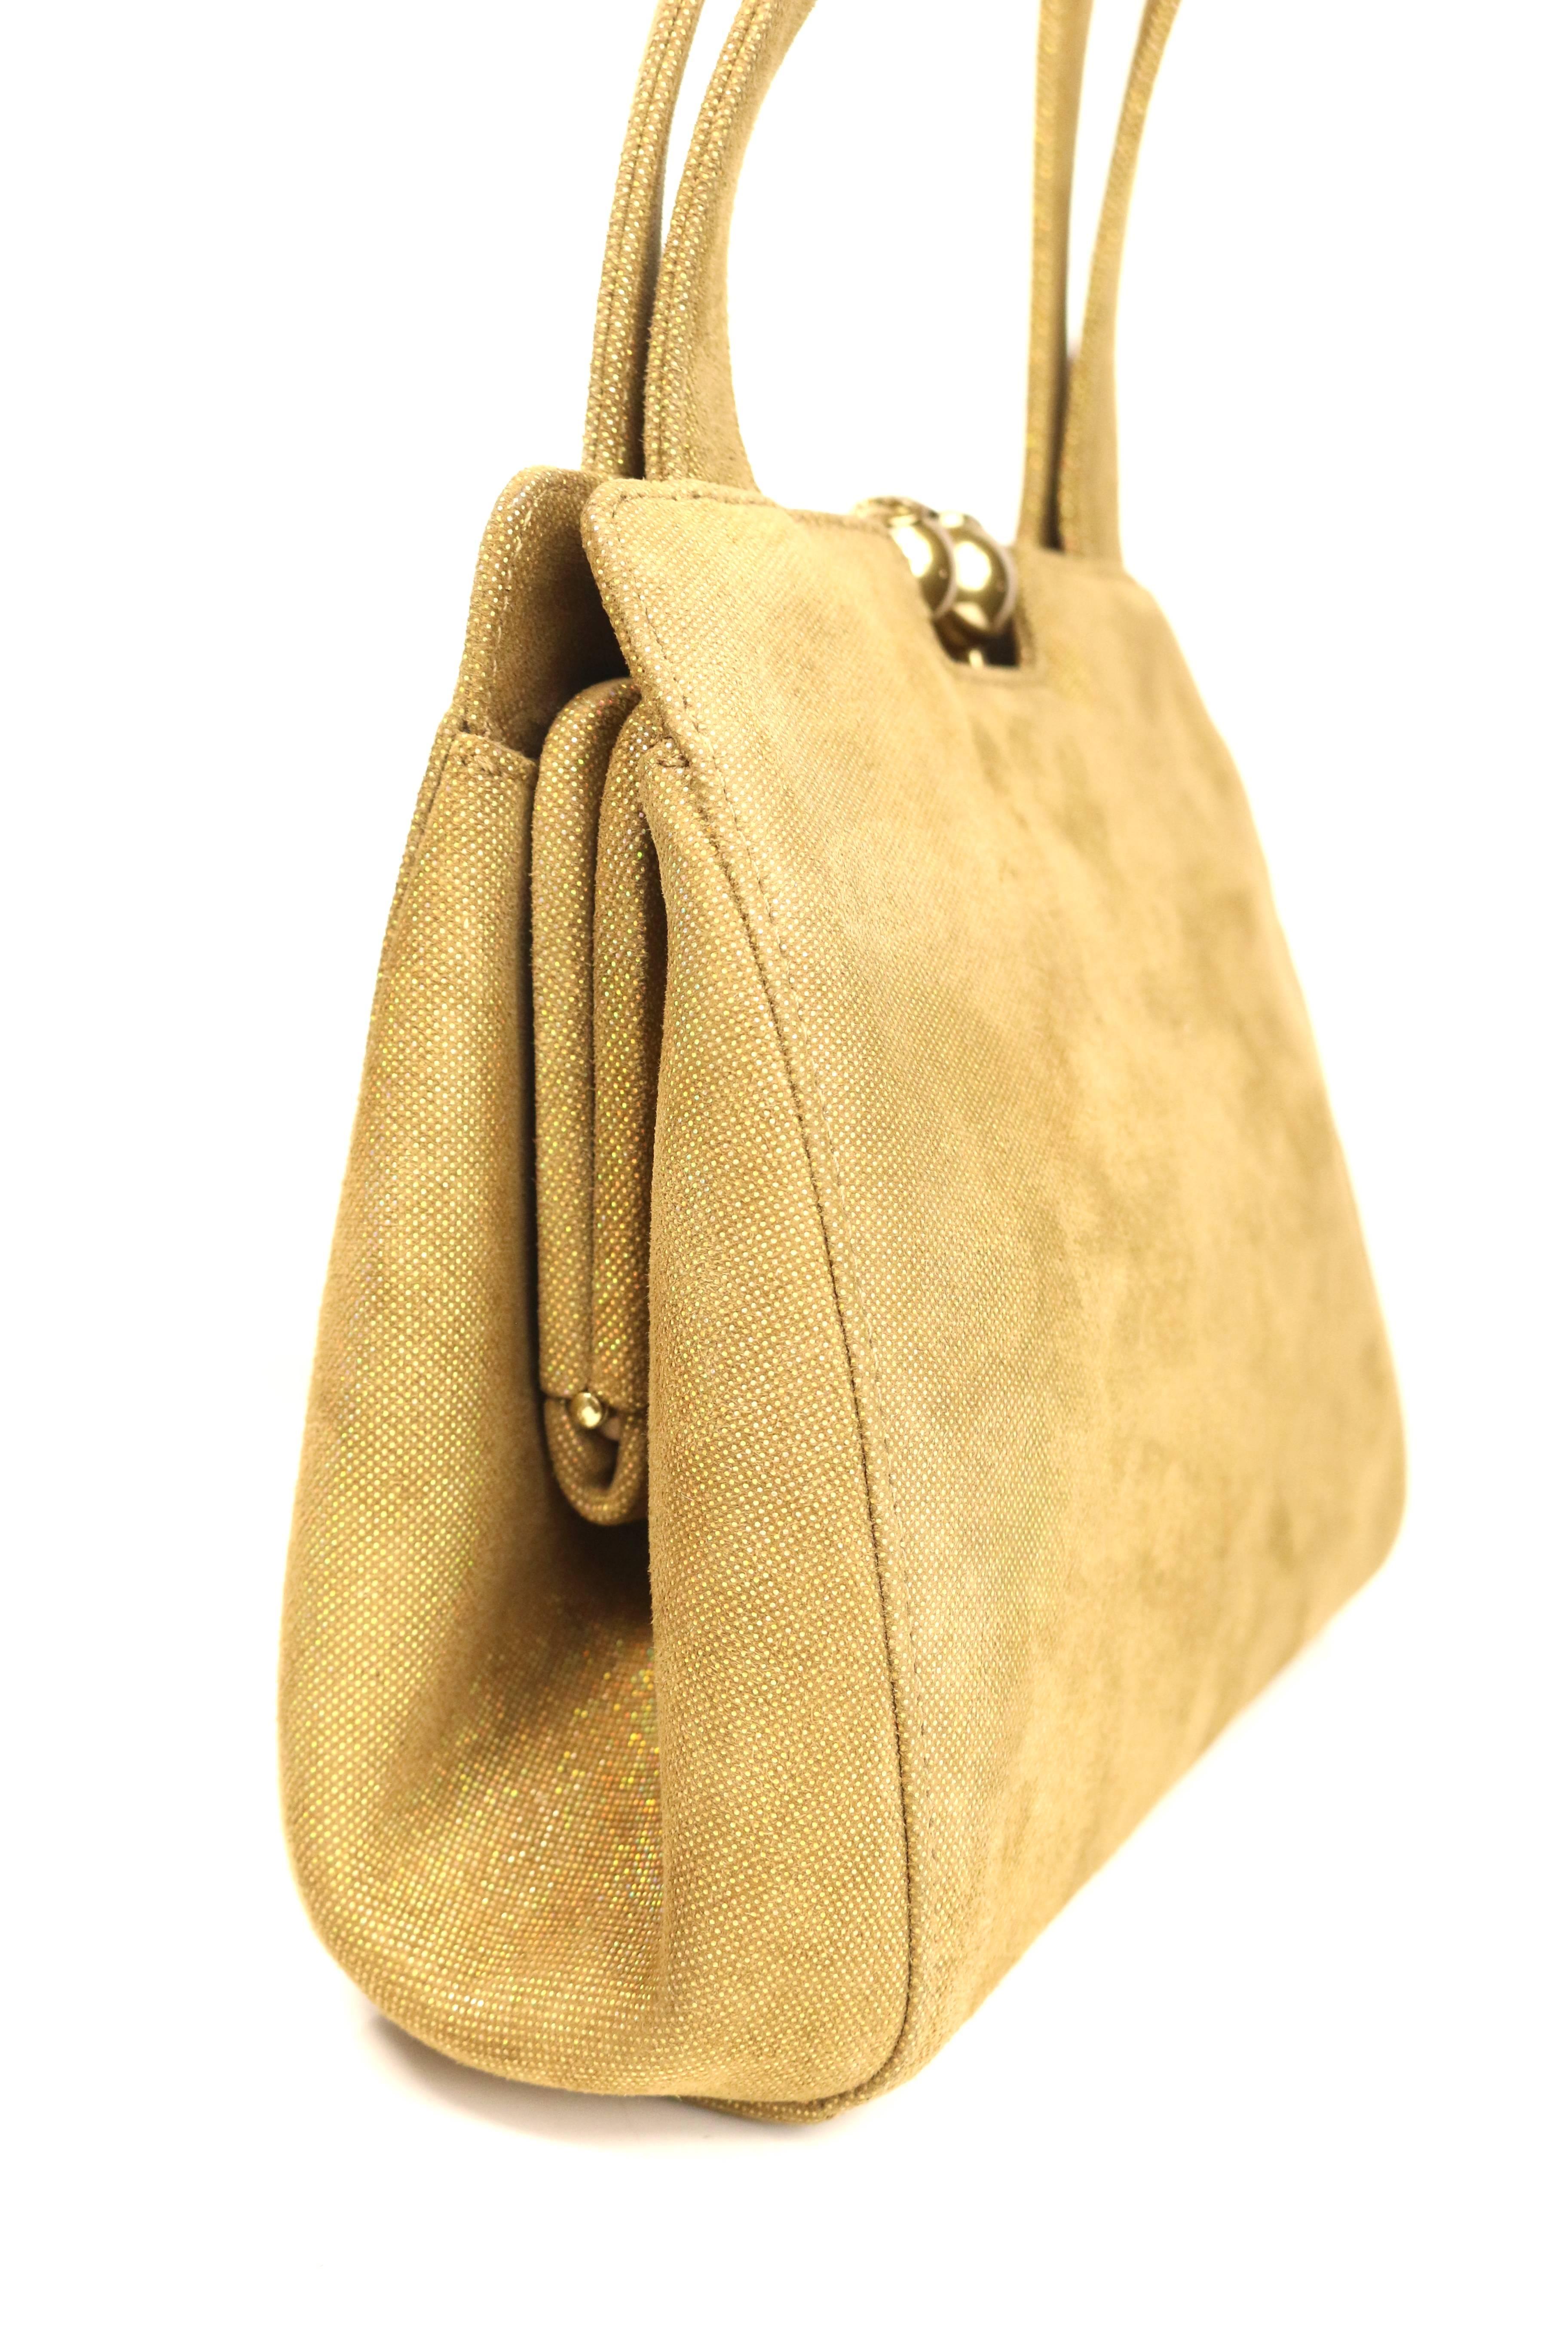 Chanel Gold Metallic Suede Small Handbag  1